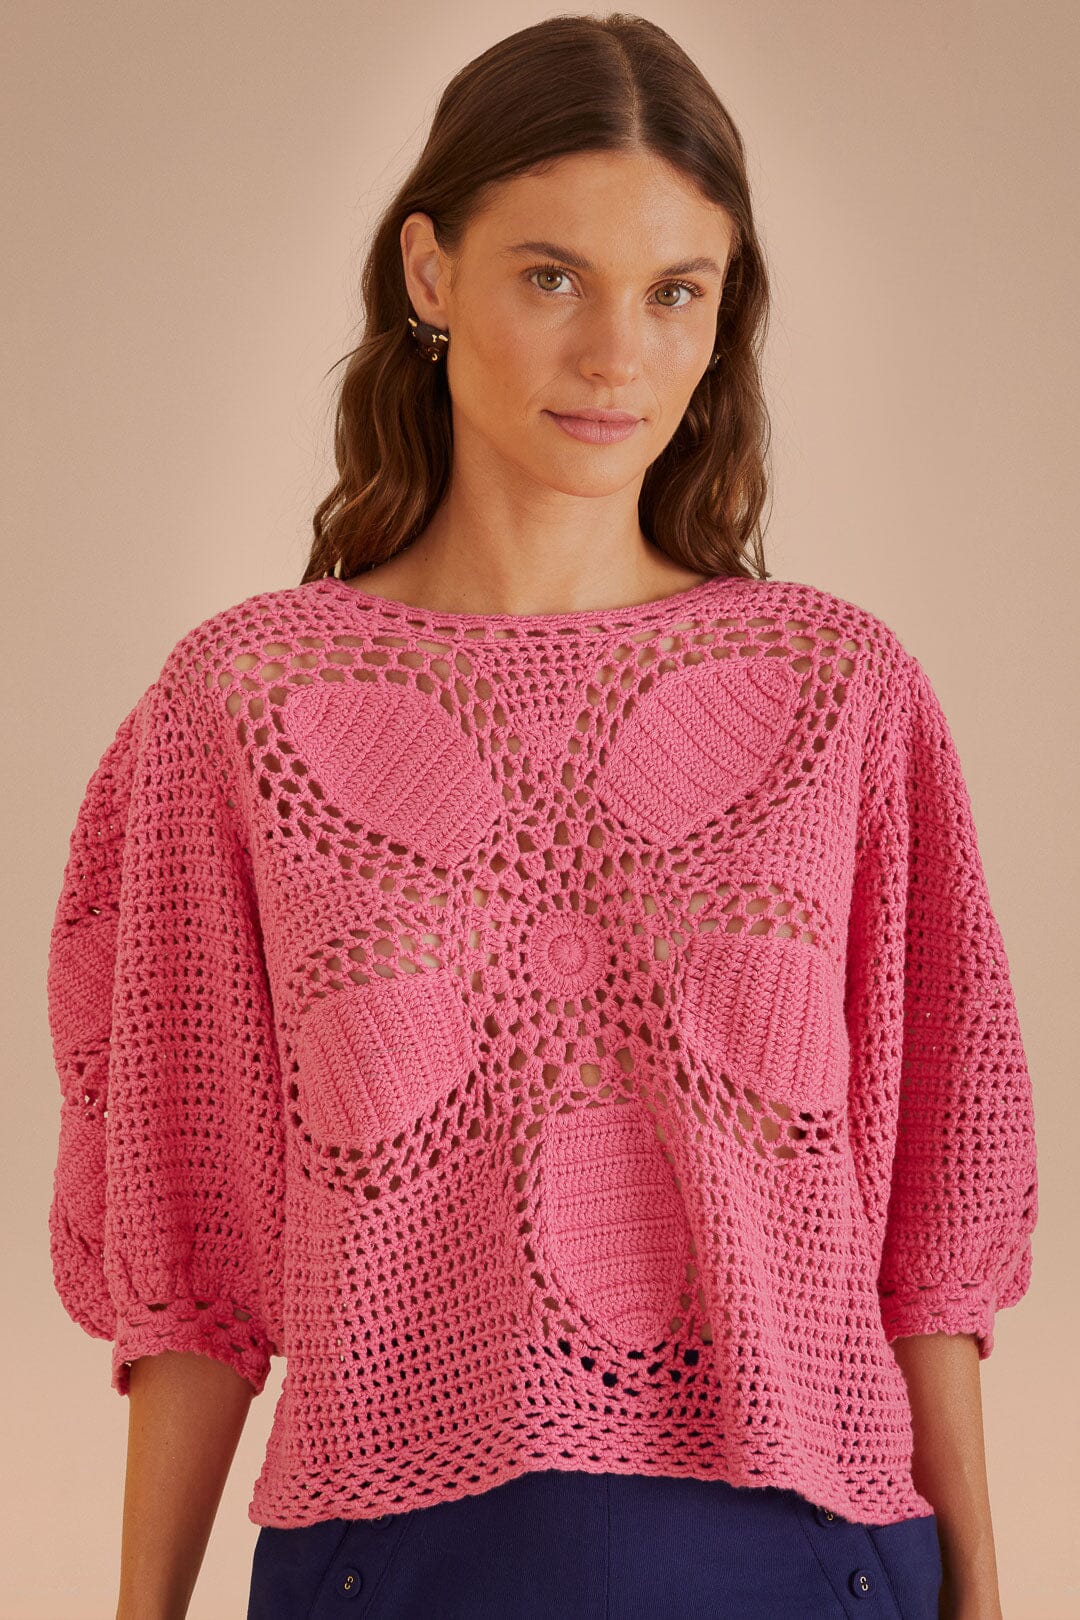 Blush Flower Draw Crochet Blouse